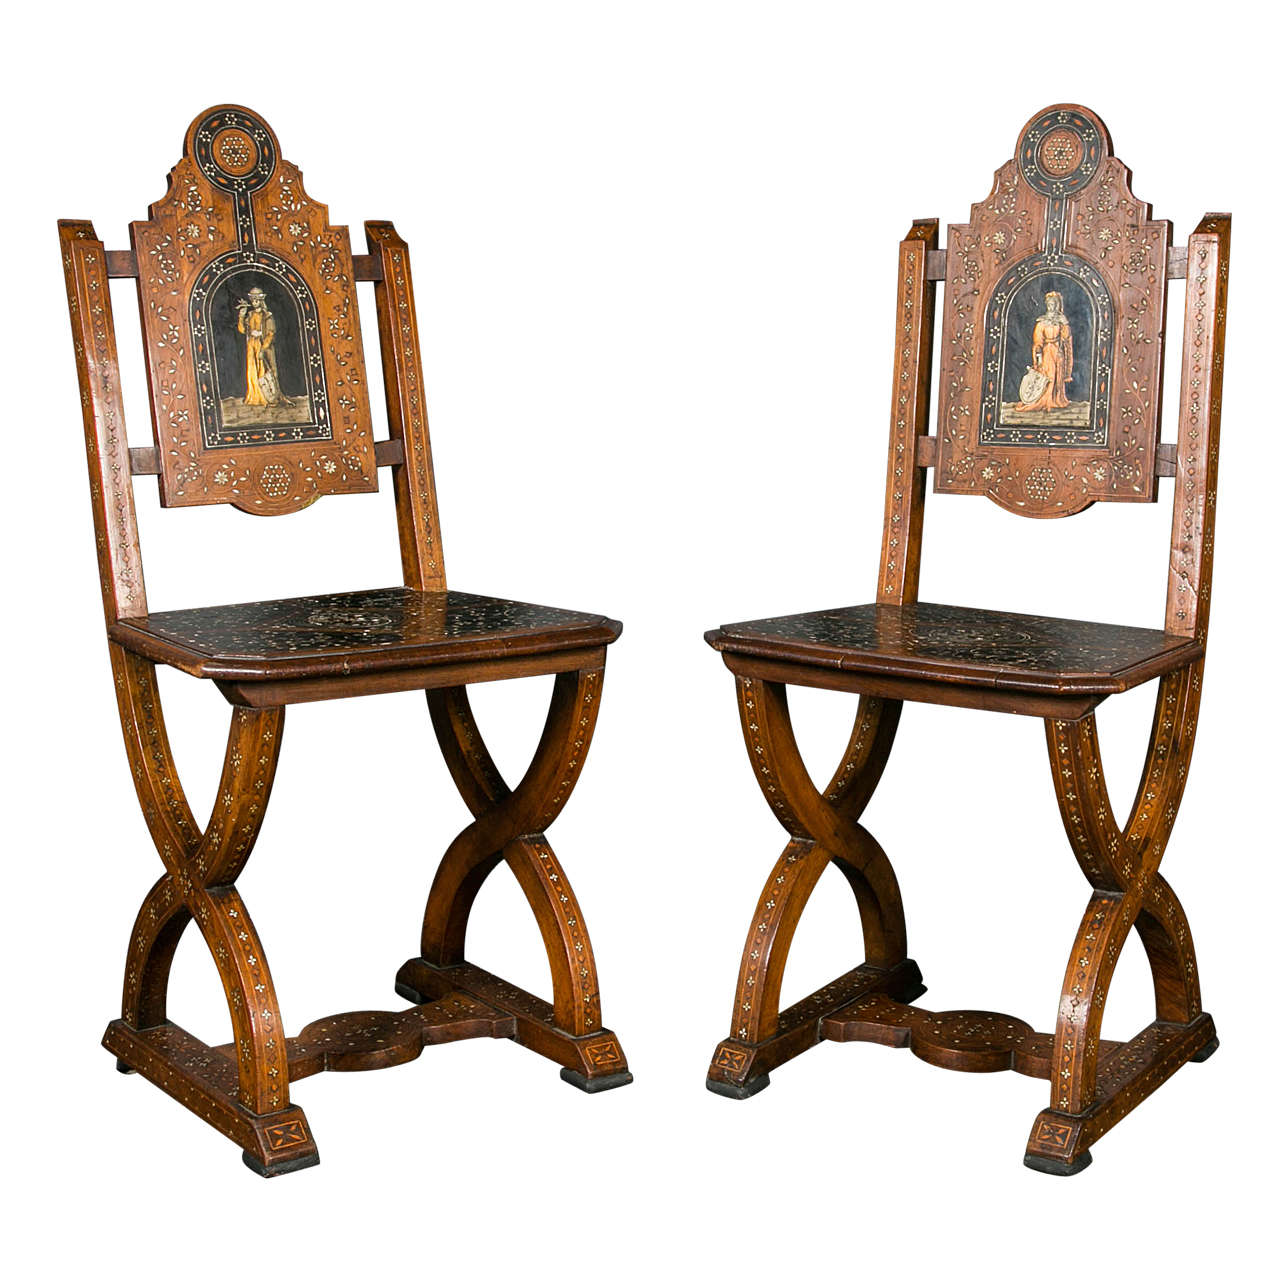 Pair of Chairs, nineteenth century